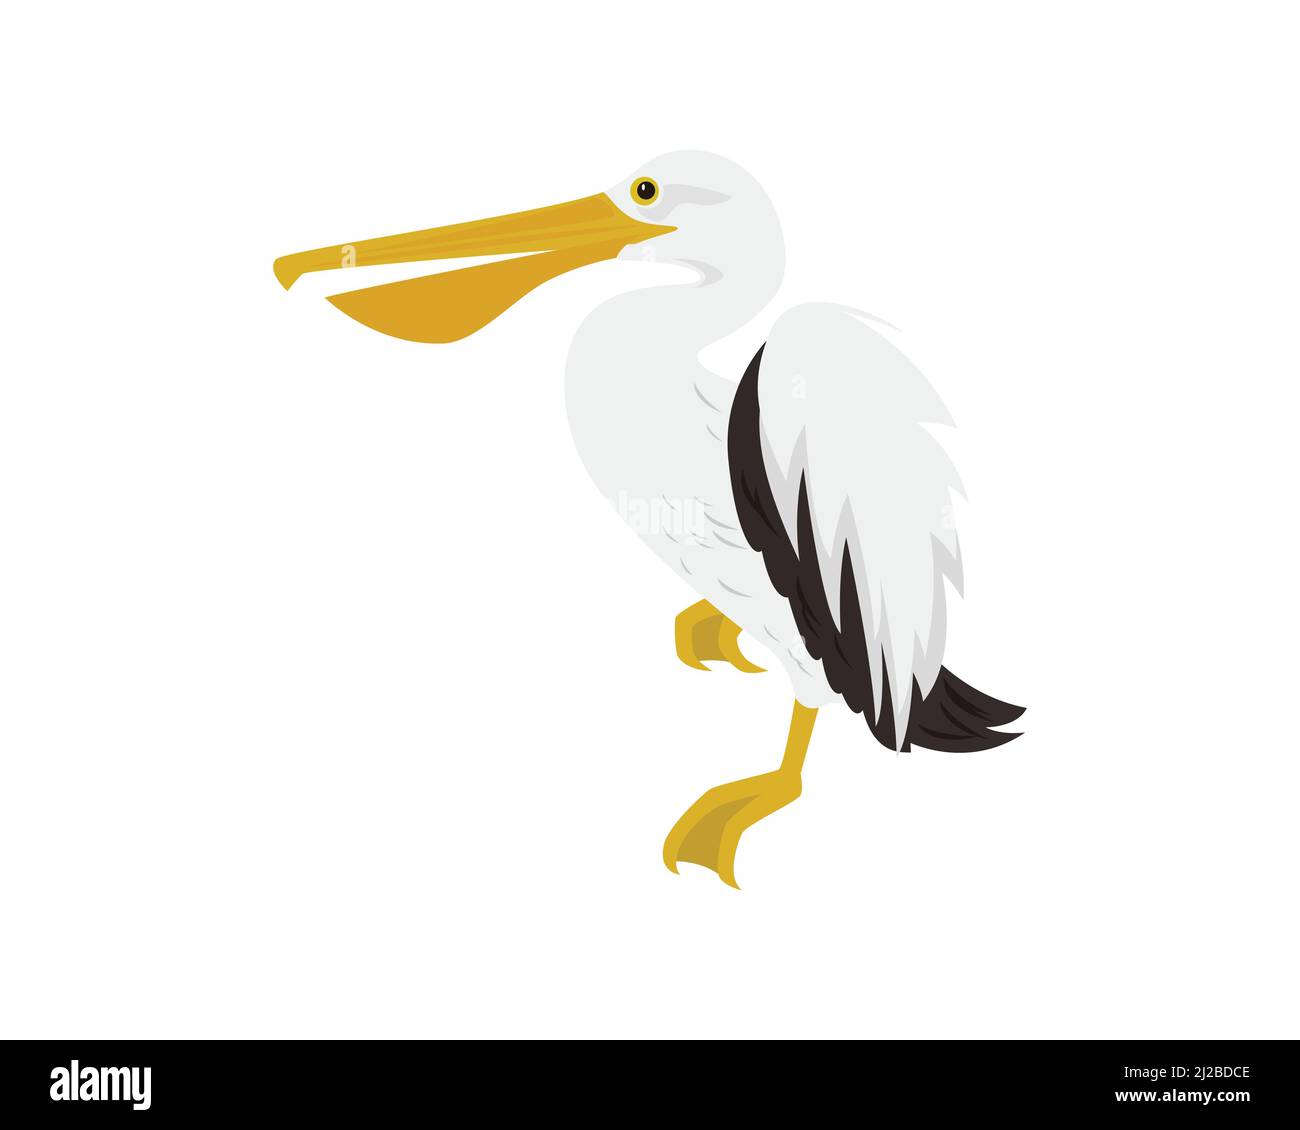 Landung Pelican und Beobachtung um Illustration Stock Vektor